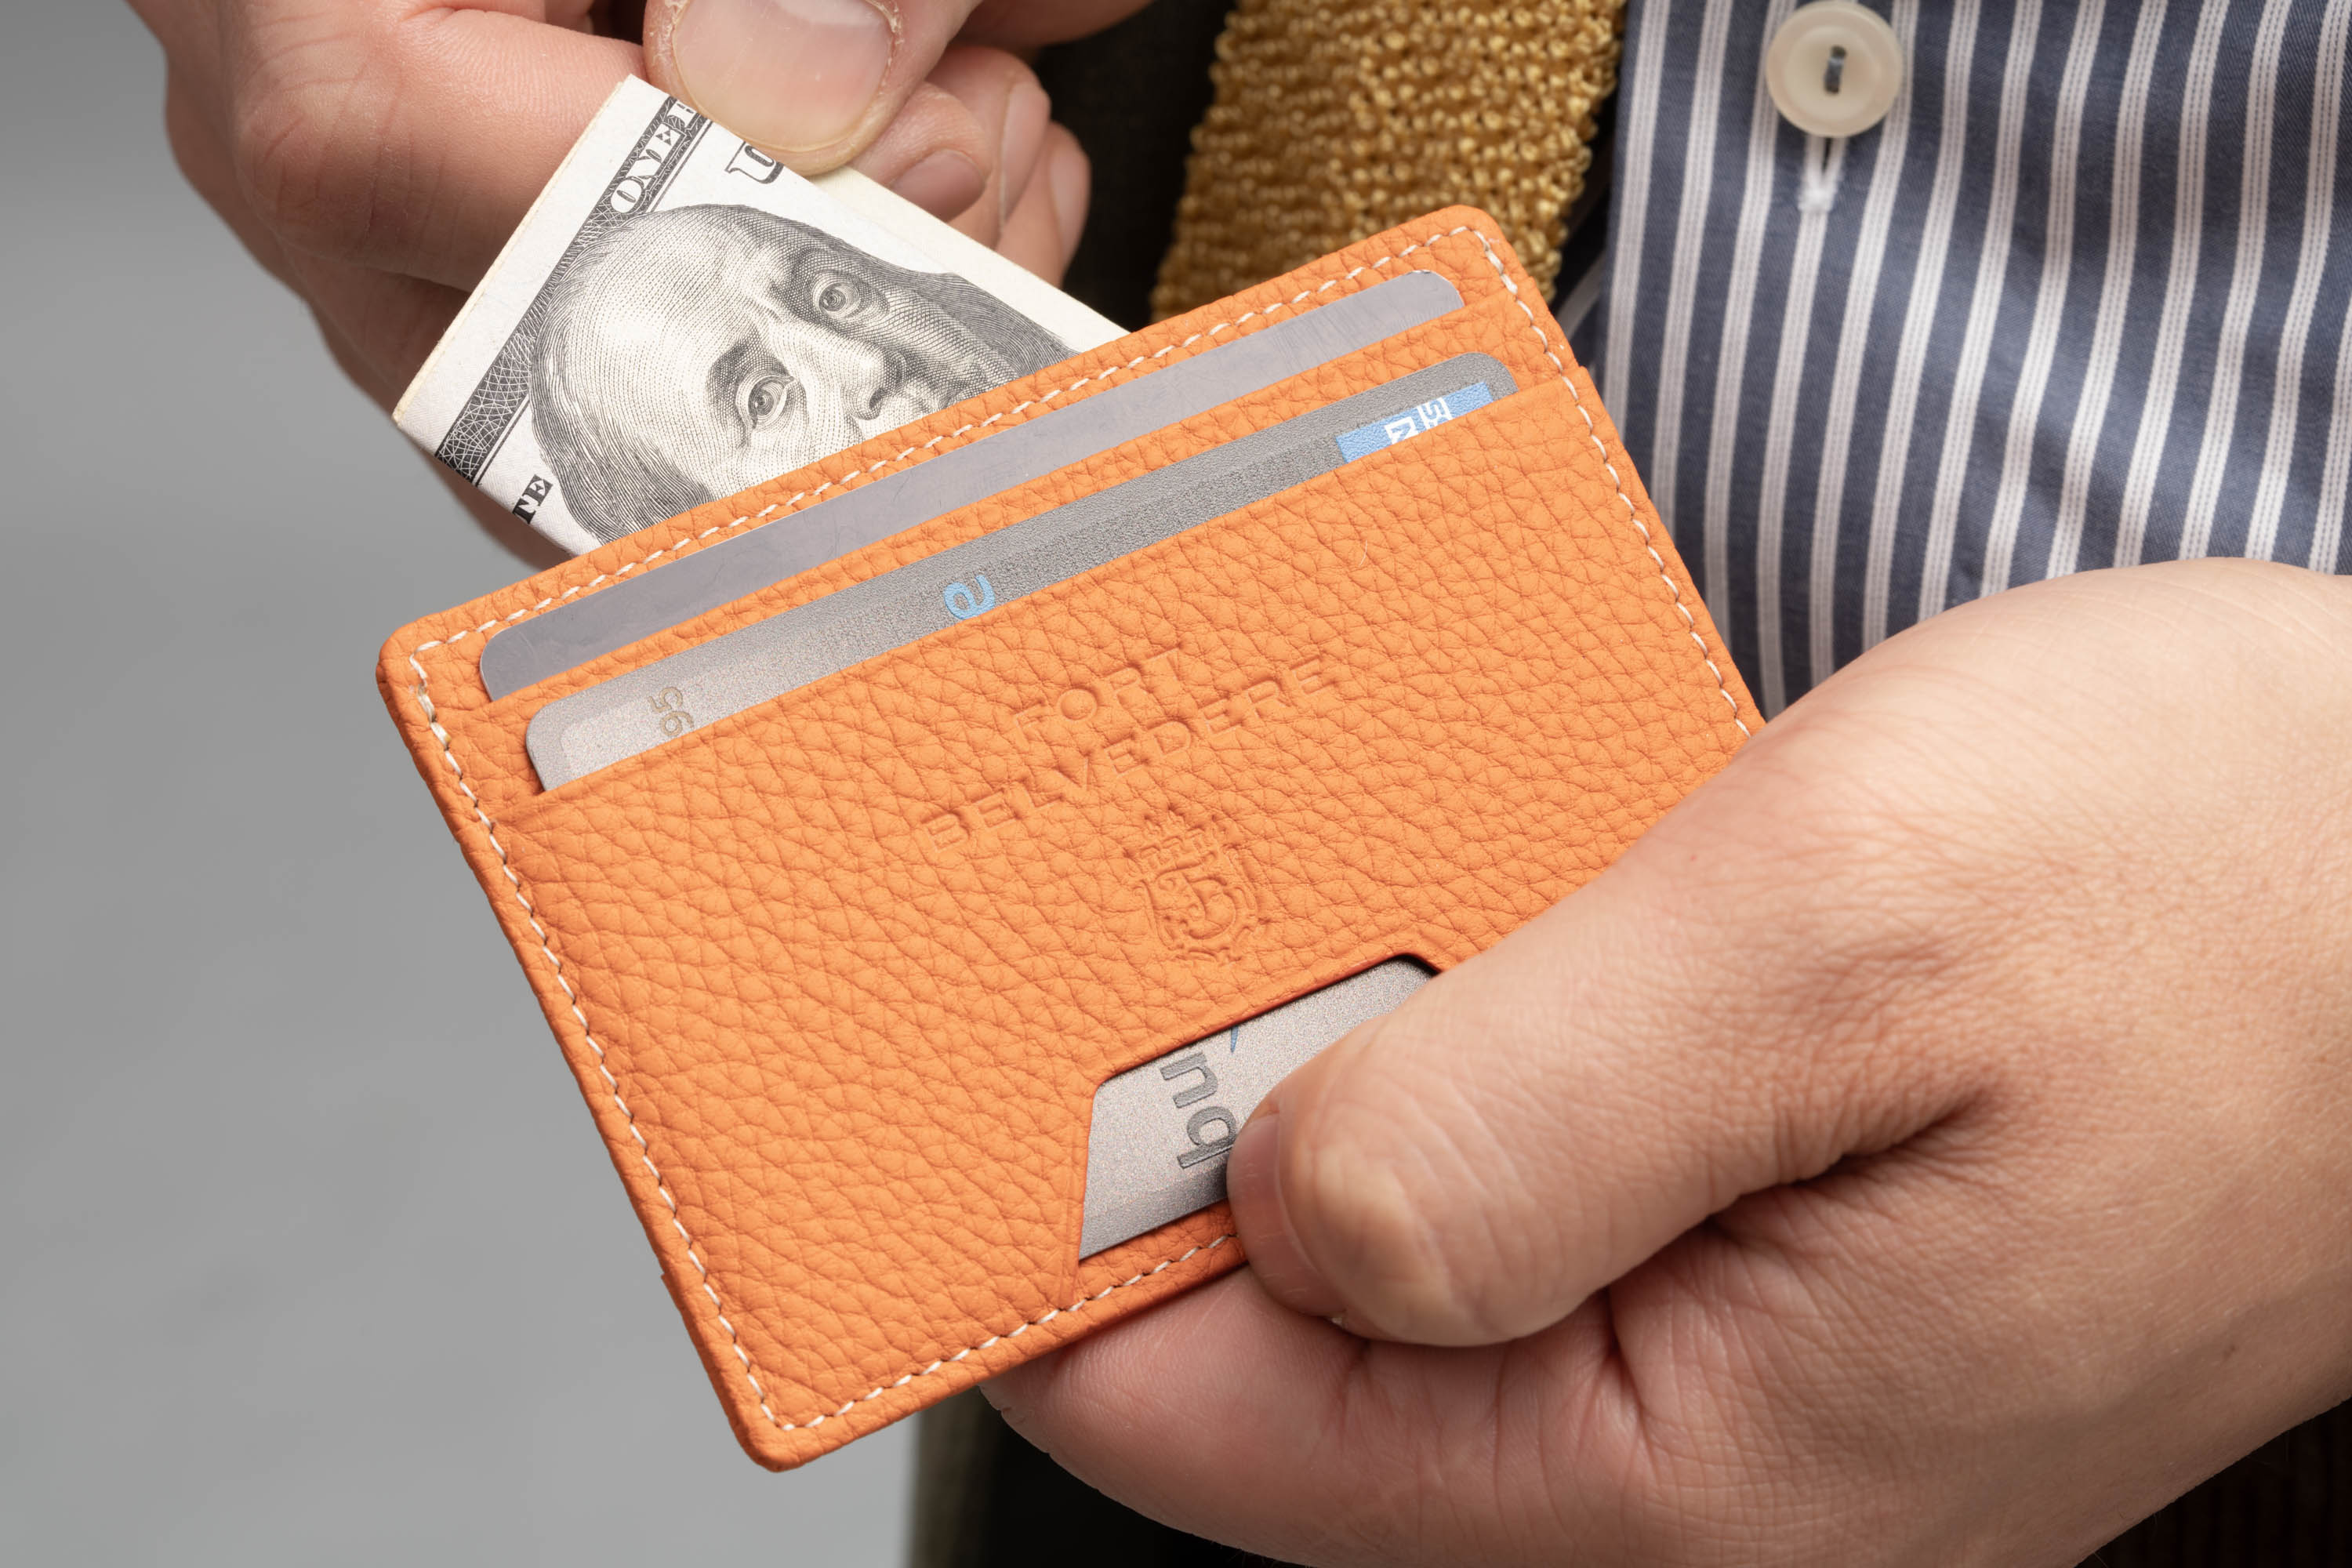 Four Card Carrier Slim Wallet in Orange Togo Leather